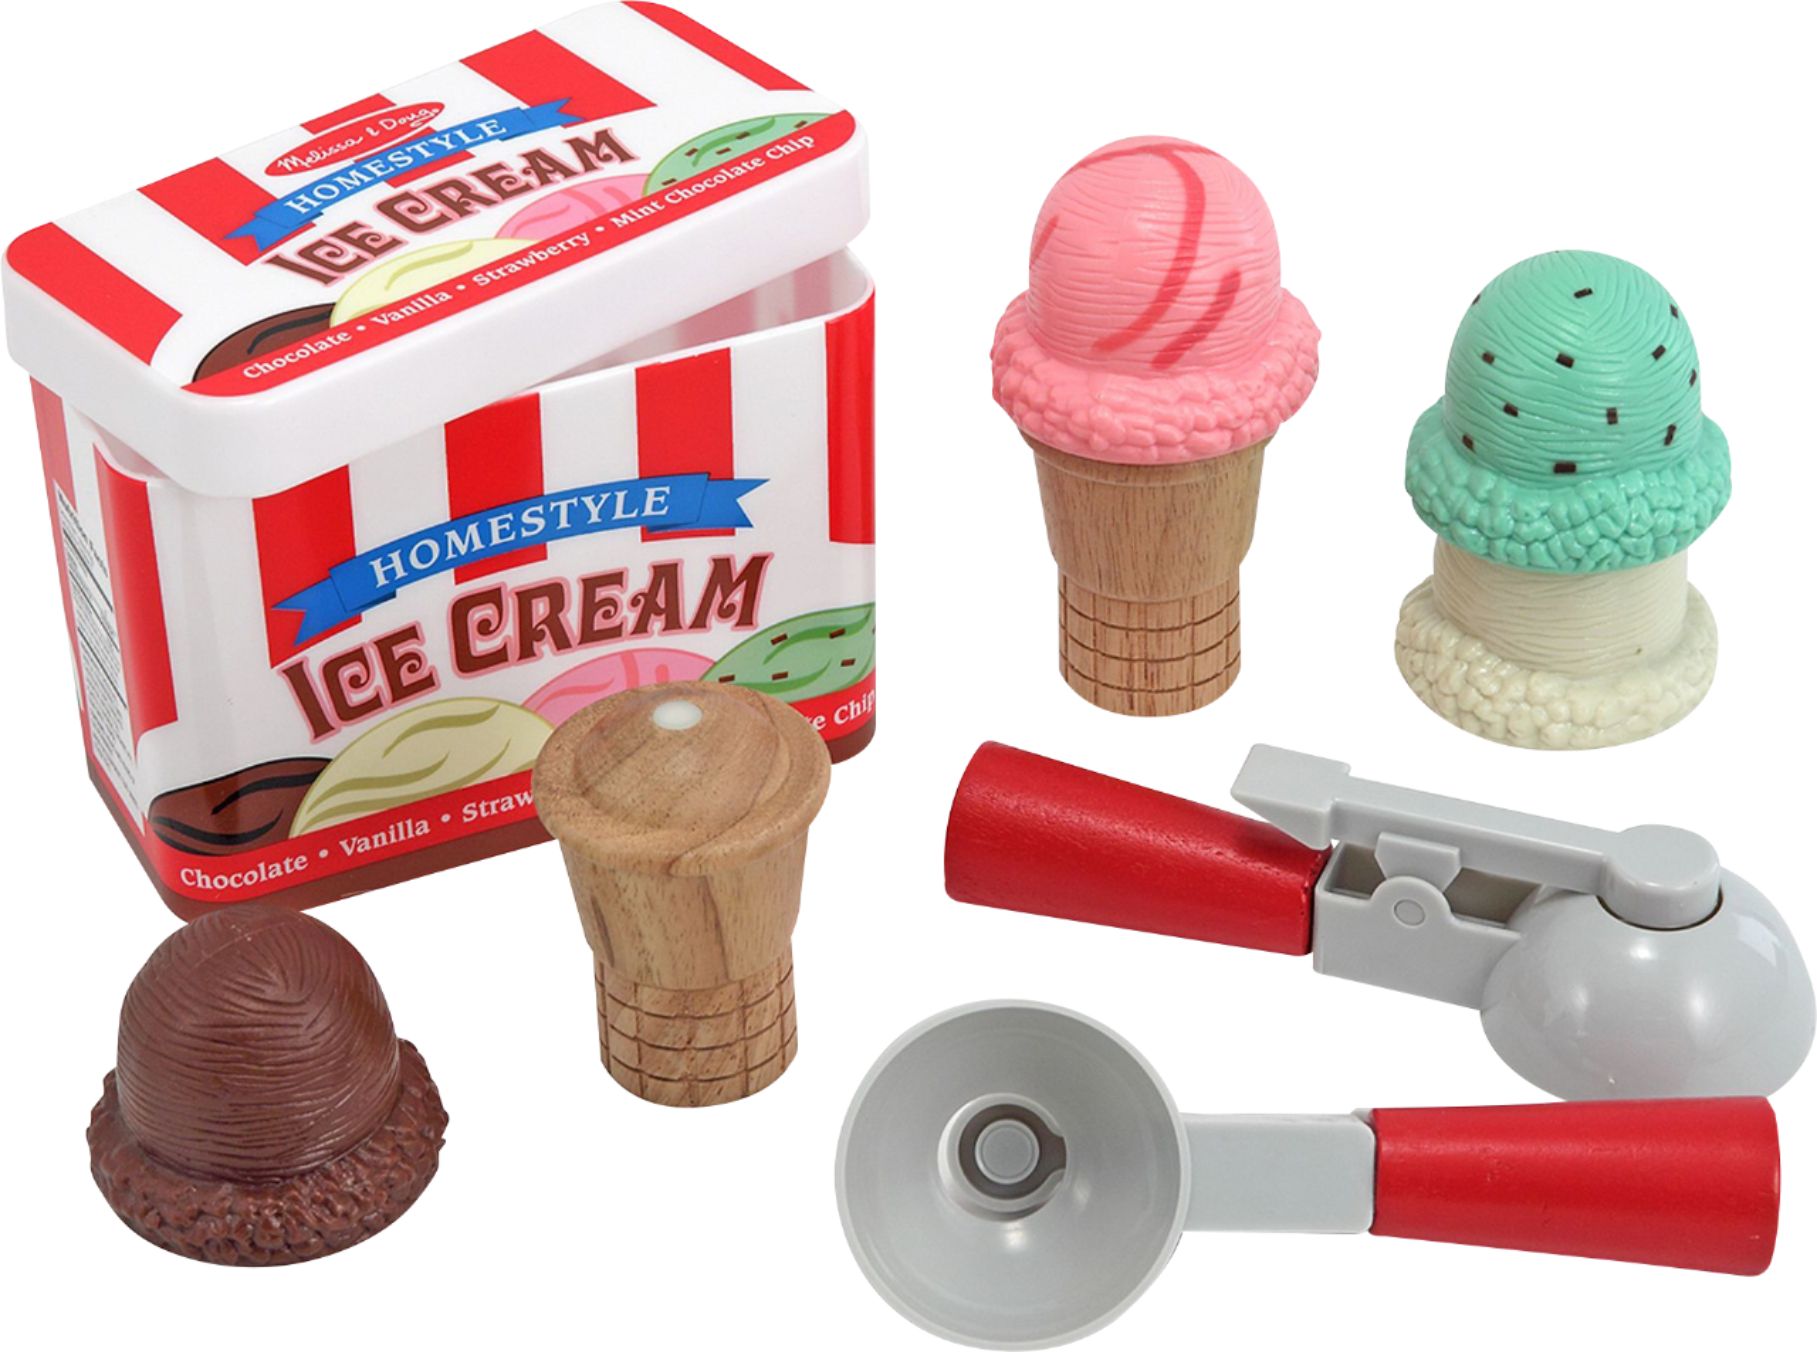 children's play ice cream set